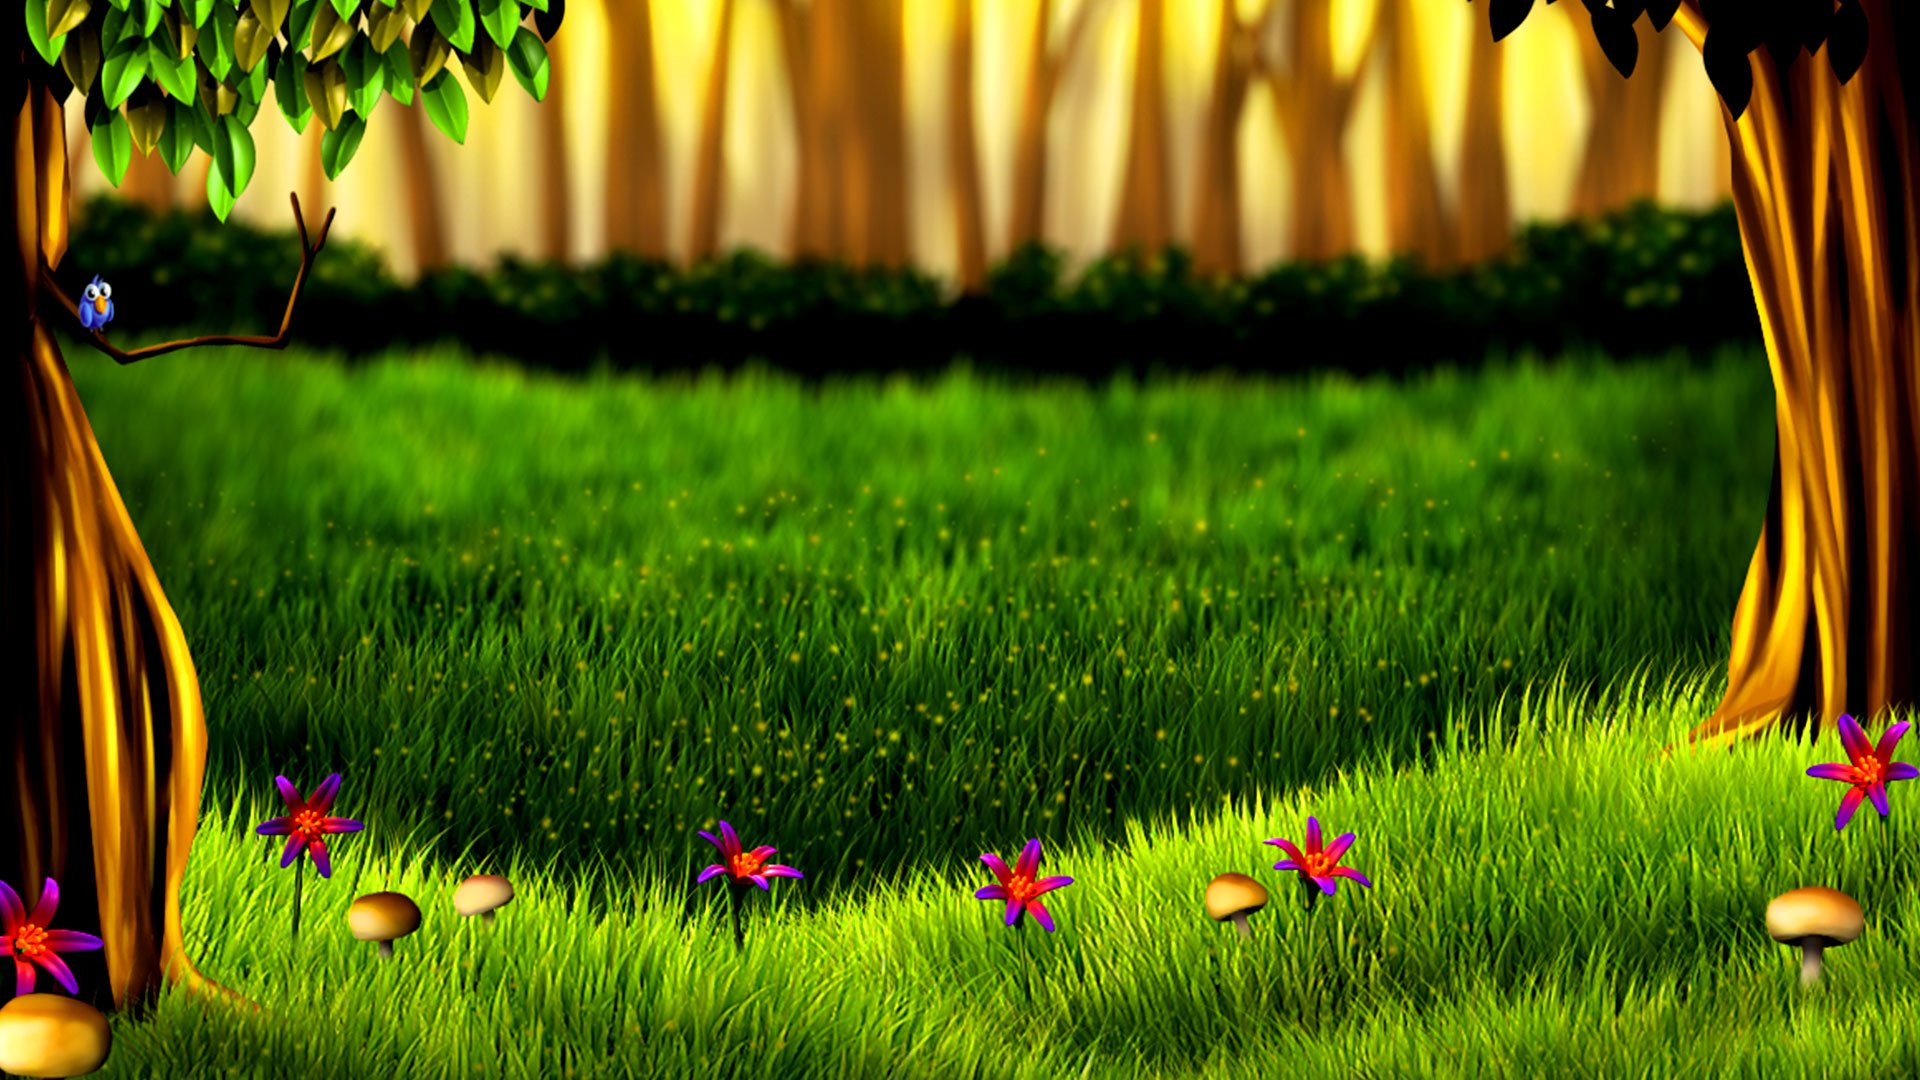 Game hight resolution background 7 Lucky Dwarfs